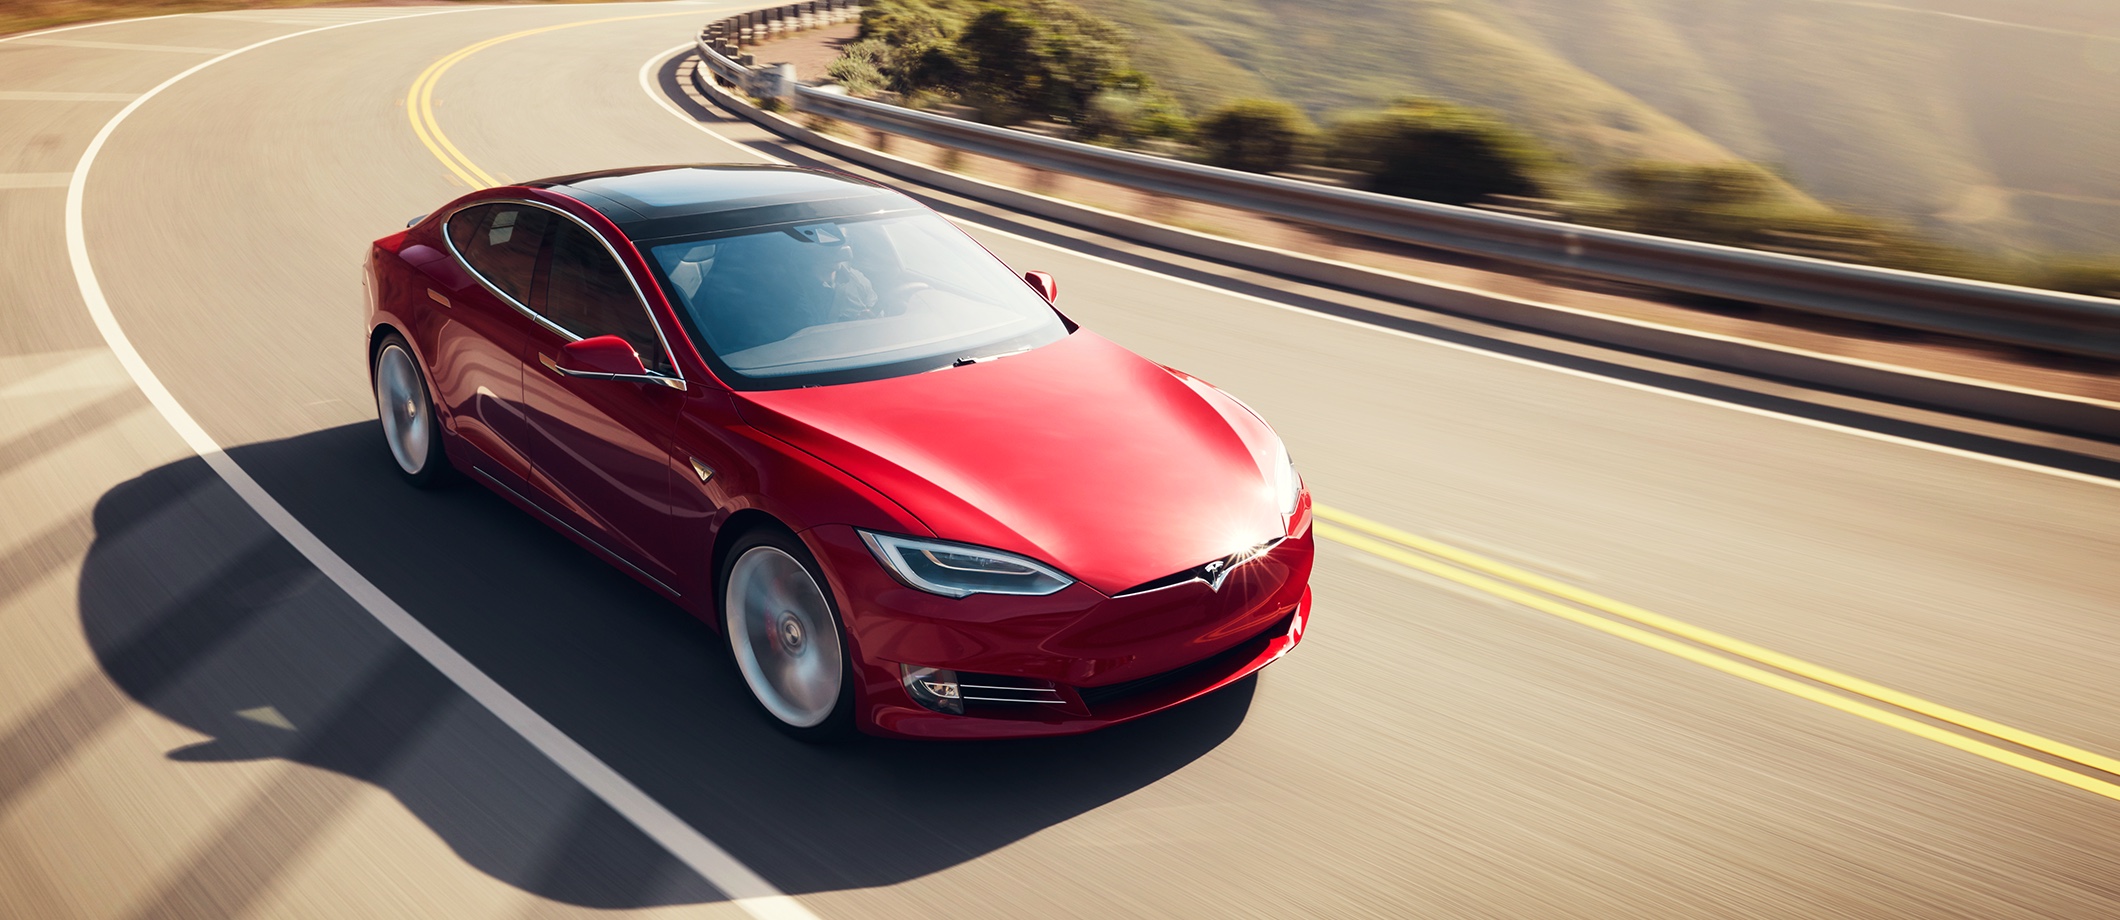 samlet set London Hindre Tesla Model S P100D scores 2.28-second 0-60 mph time in new Motor Trend  test | TechCrunch